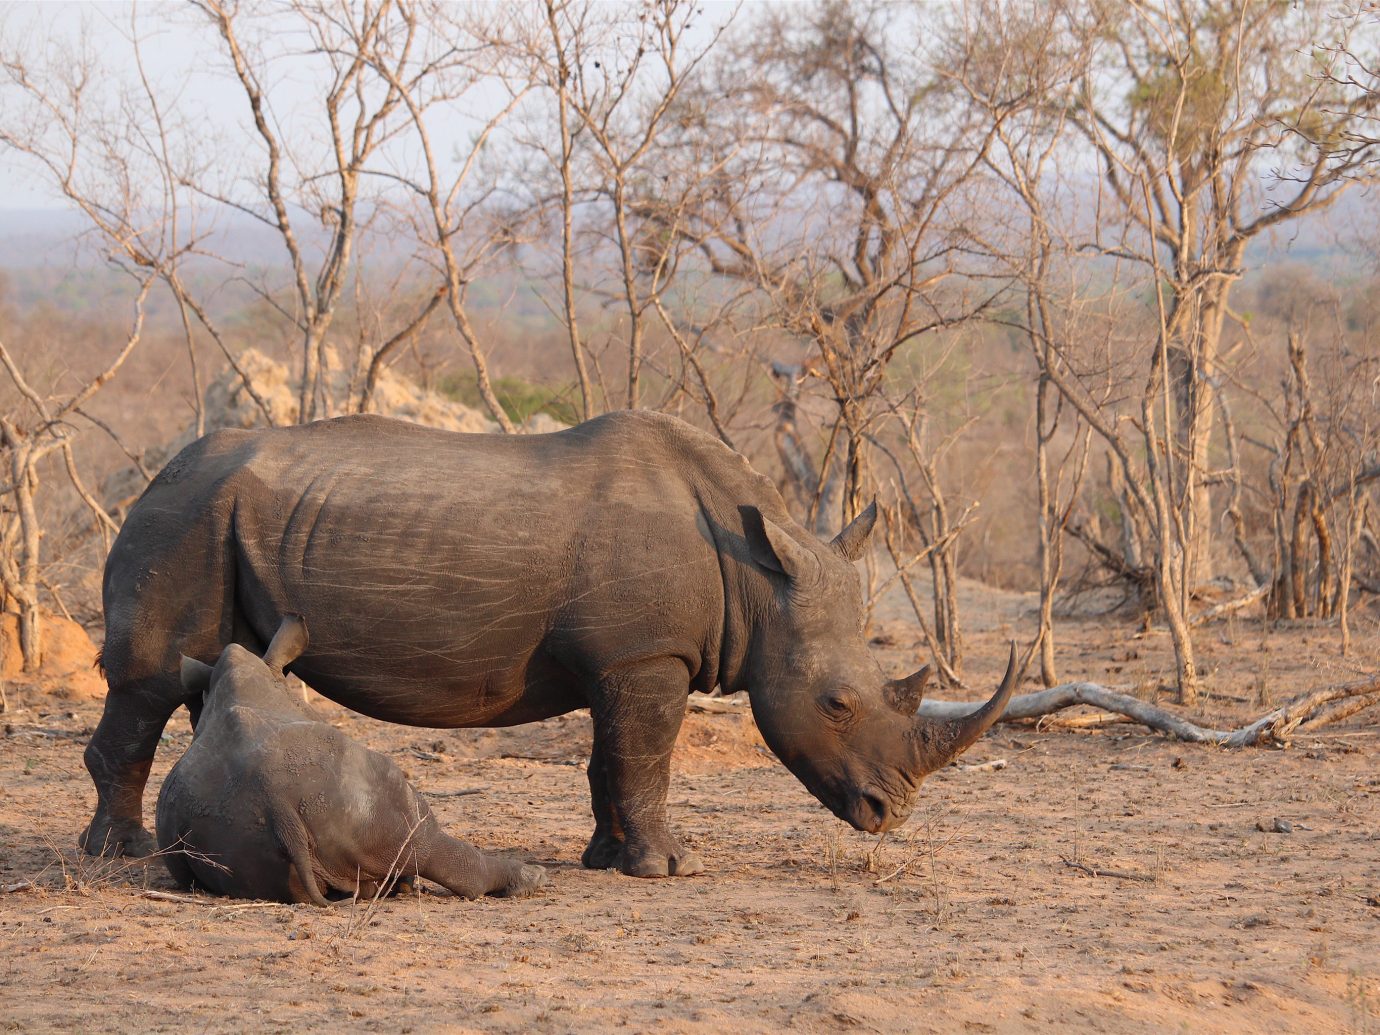 Outdoors + Adventure Safaris Trip Ideas tree animal outdoor mammal ground rhinoceros Wildlife fauna indian elephant savanna Safari baby Adventure dry dirt Forest